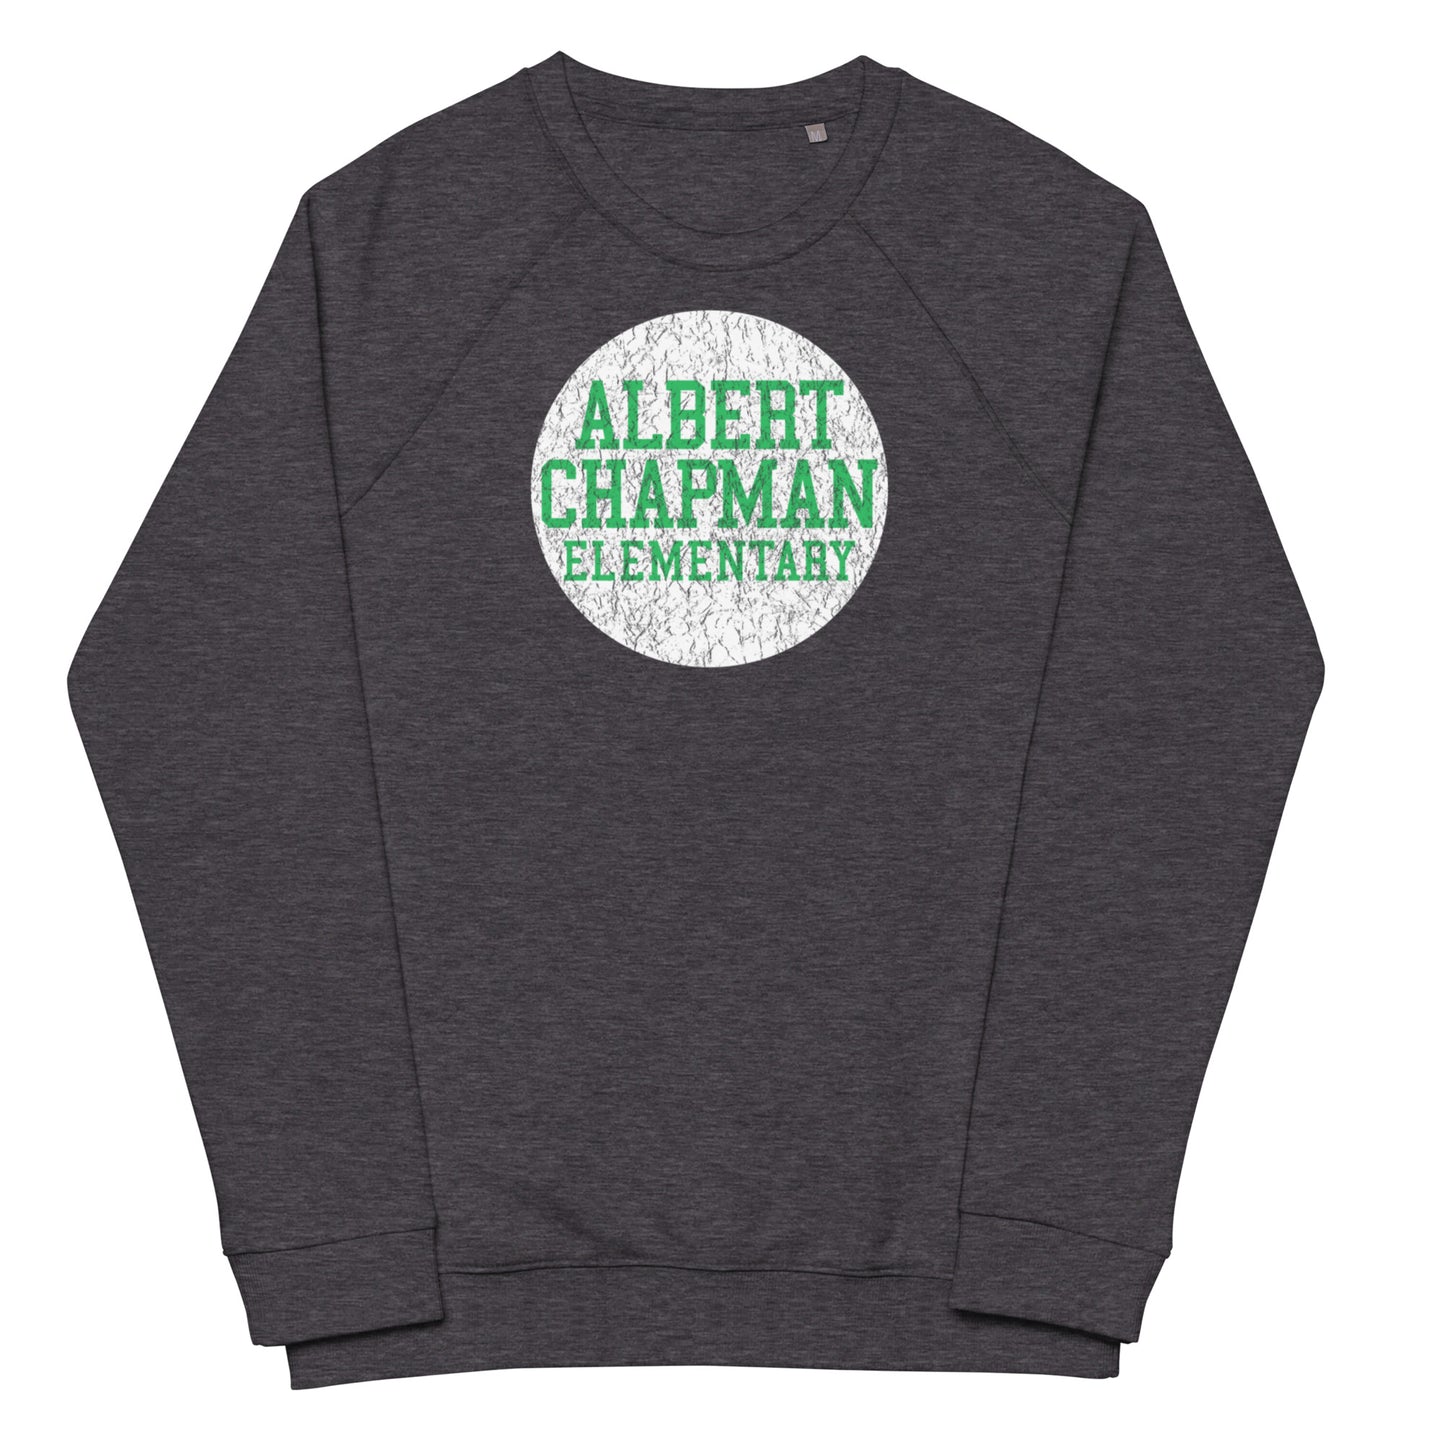 ALBERT CHAPMAN ELEMENTARY_distressed_medallion-Unisex organic raglan sweatshirt